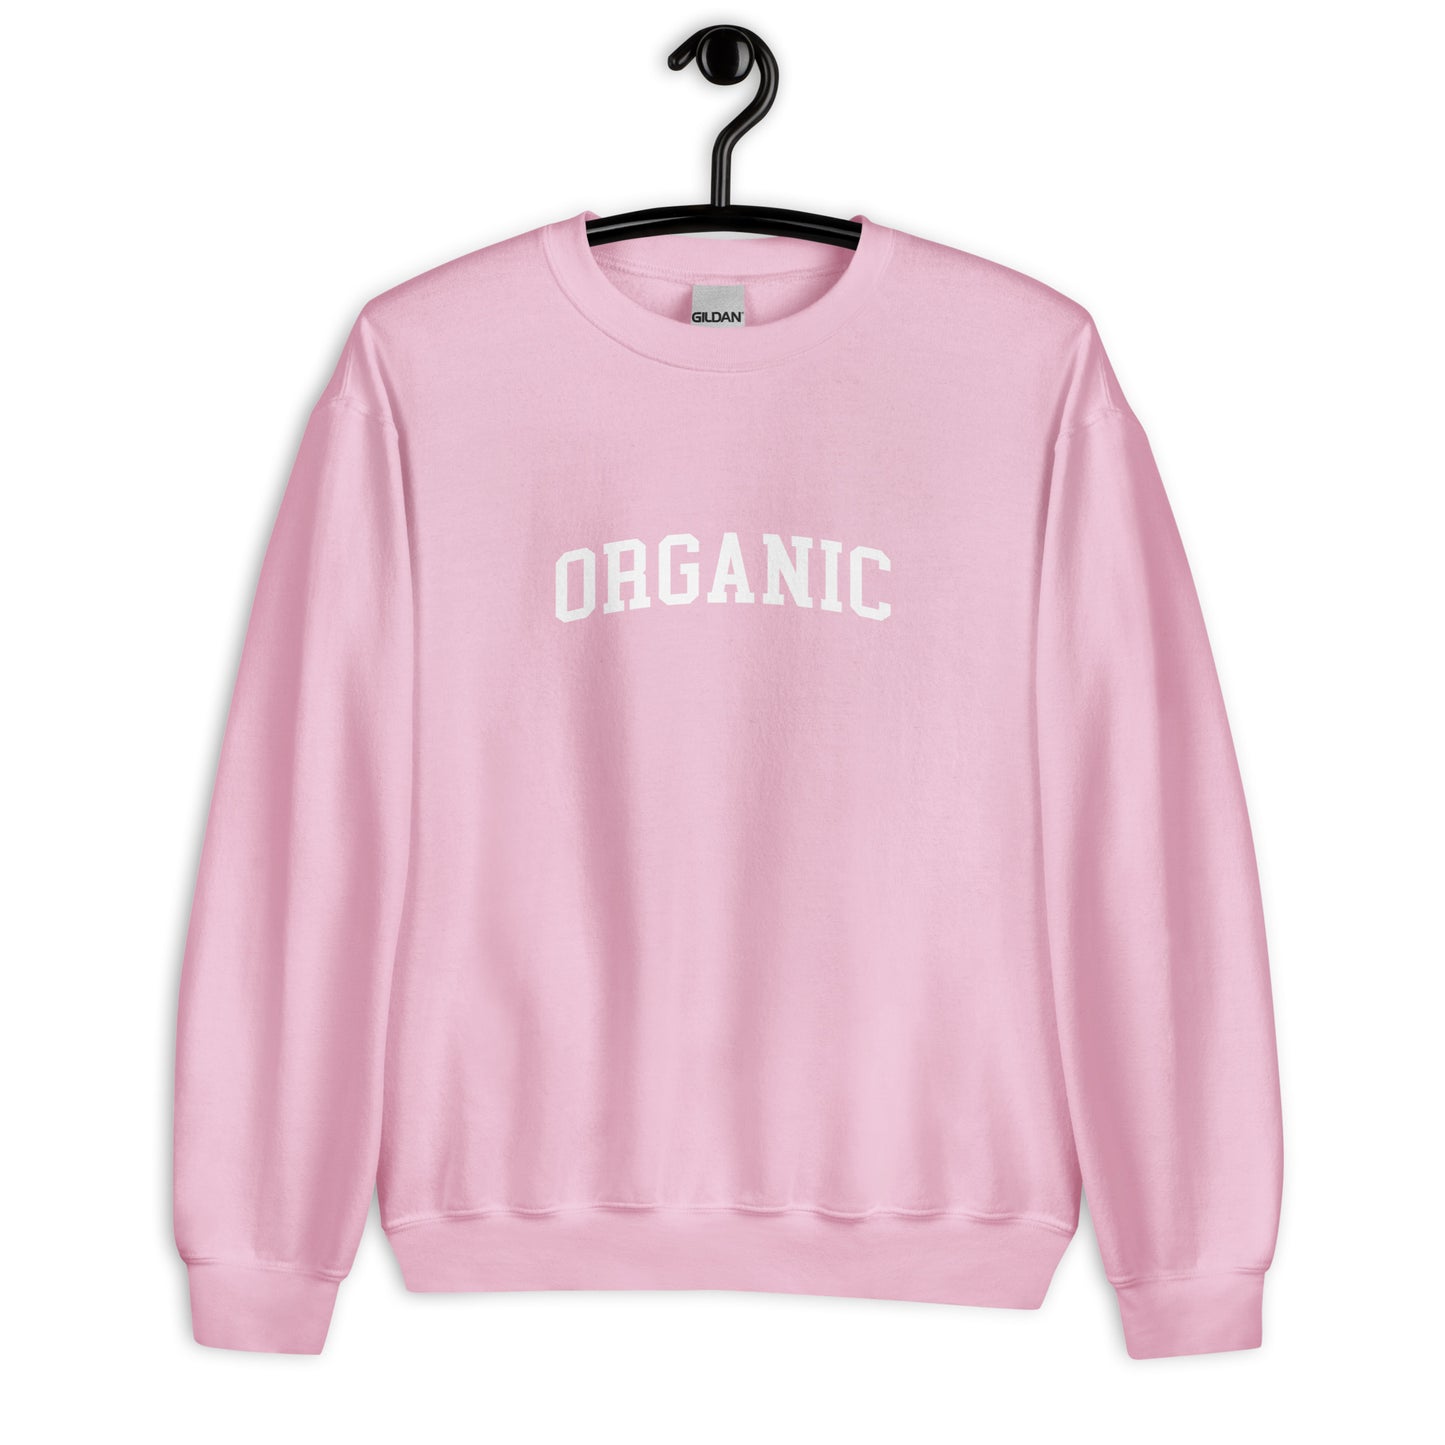 Organic Sweatshirt - Arched Font